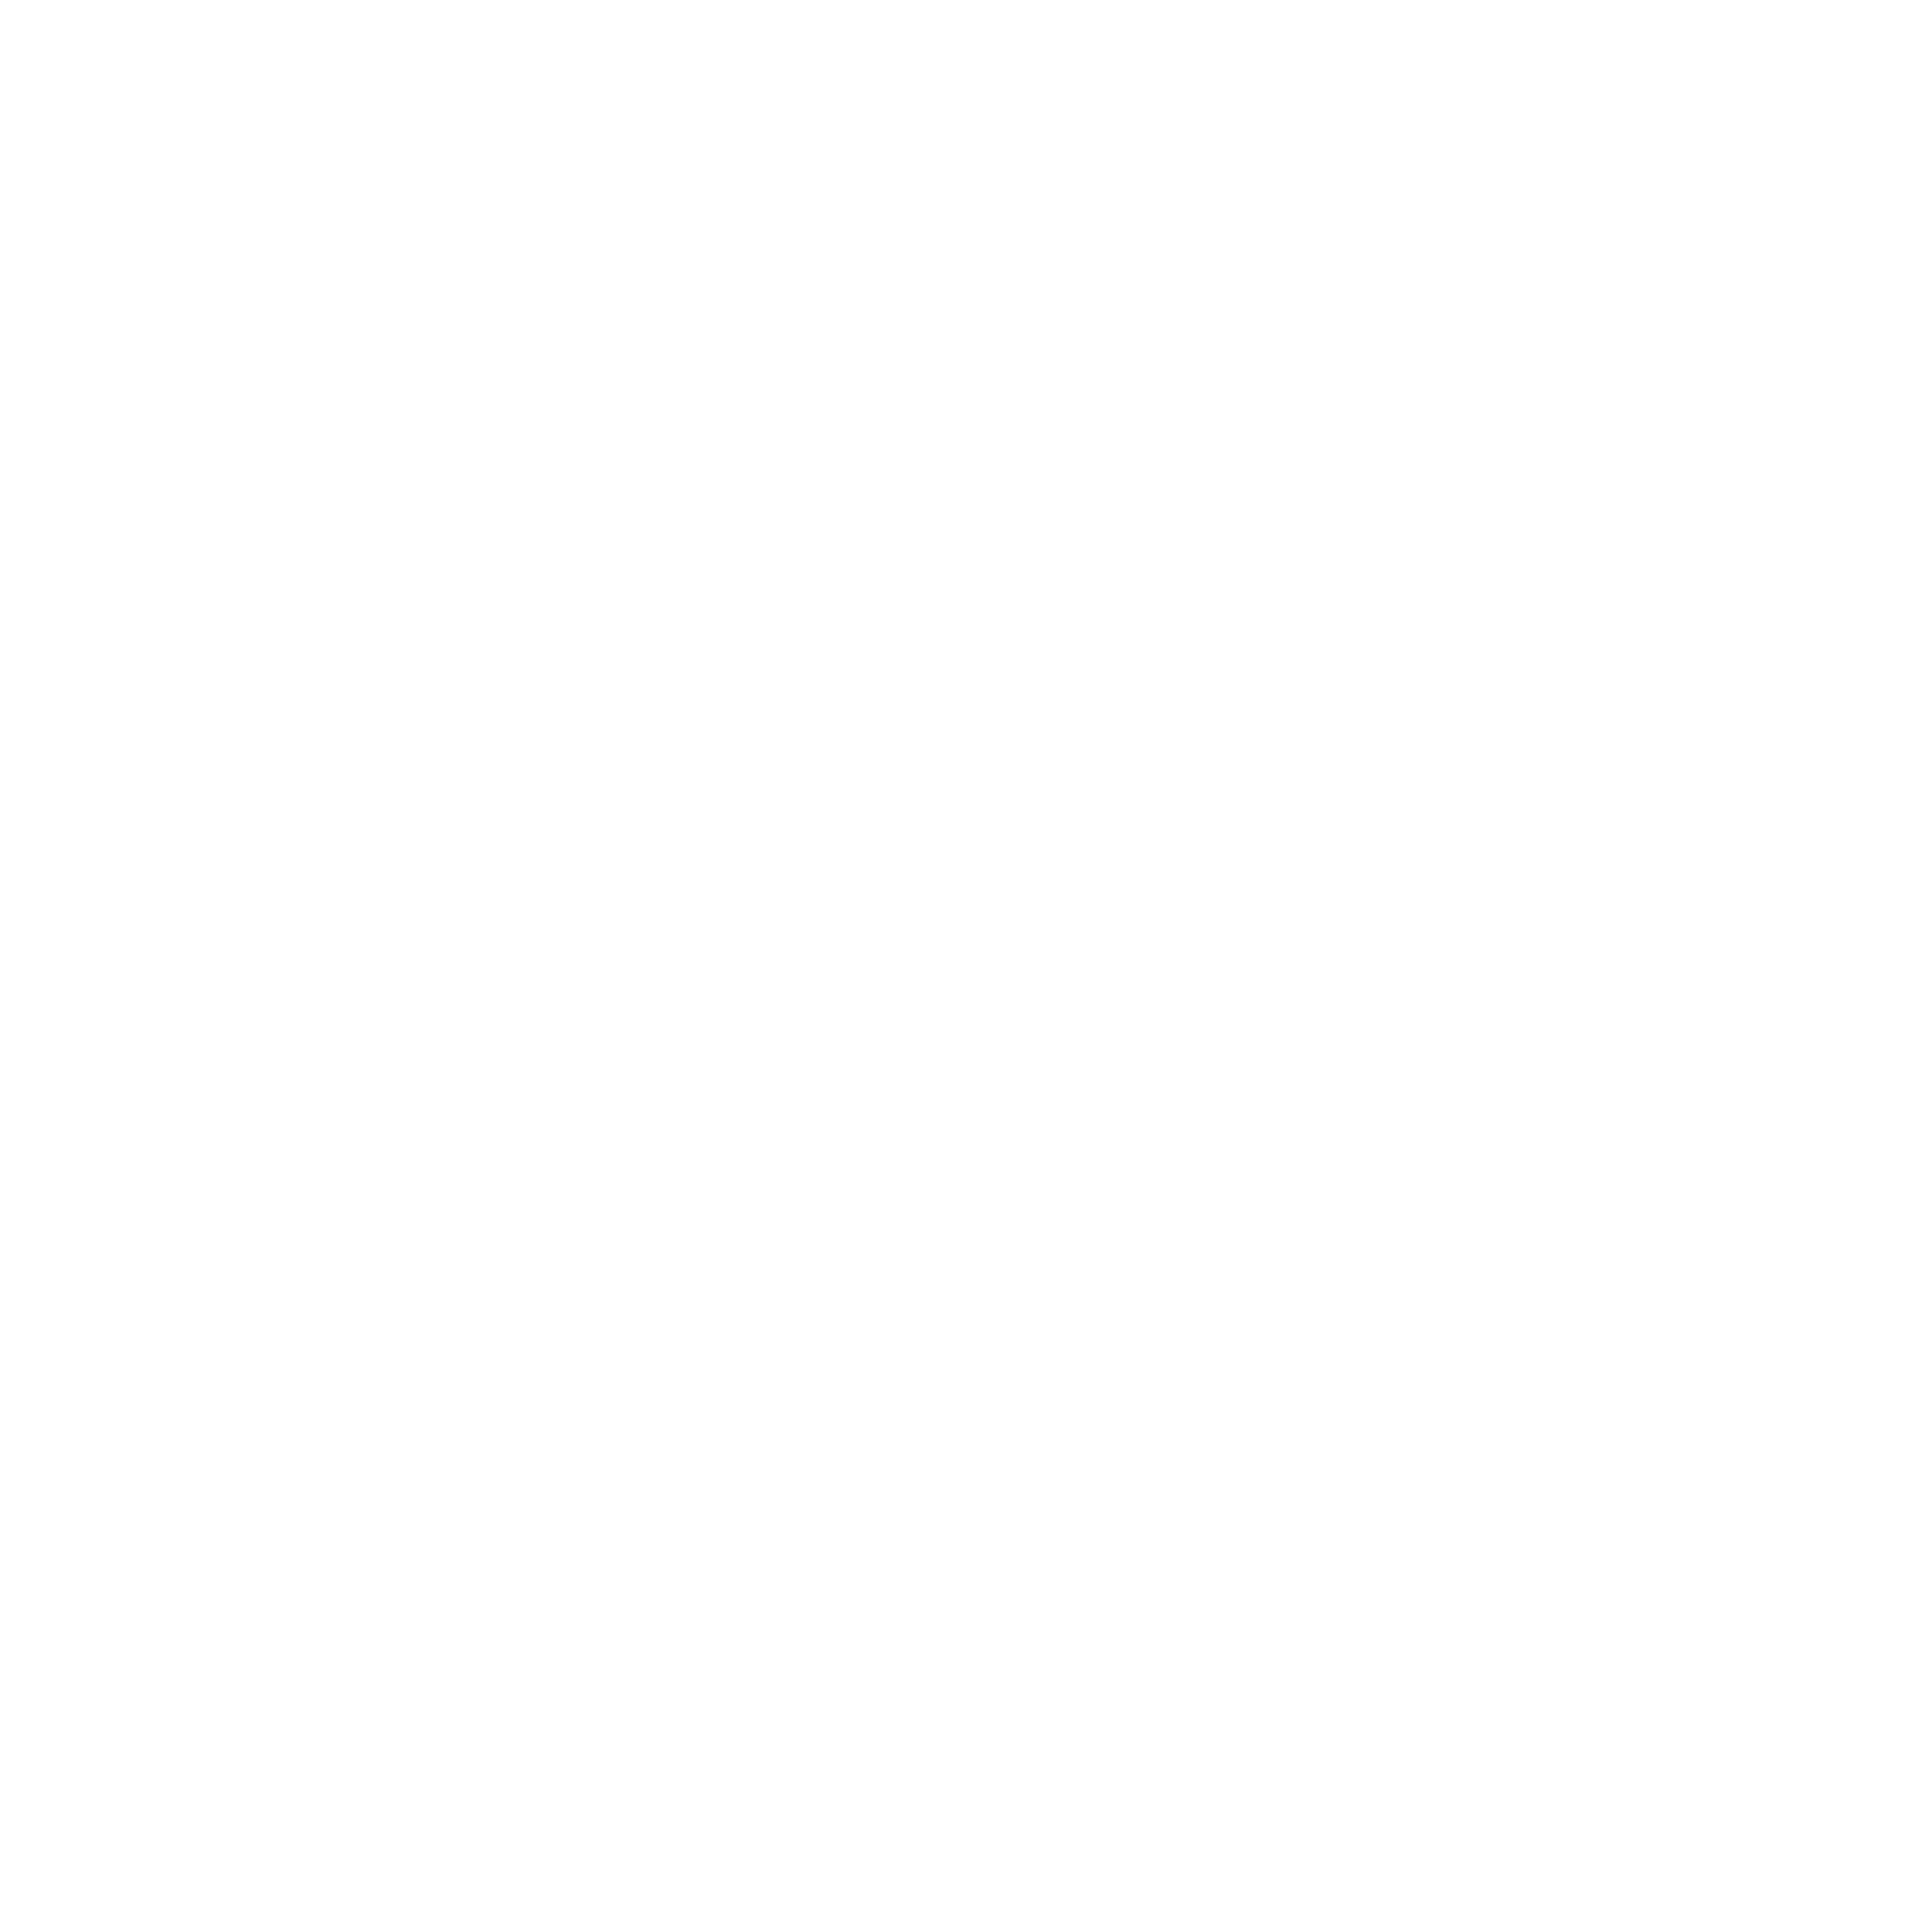 Roche Logo - Roche Logo PNG Transparent & SVG Vector